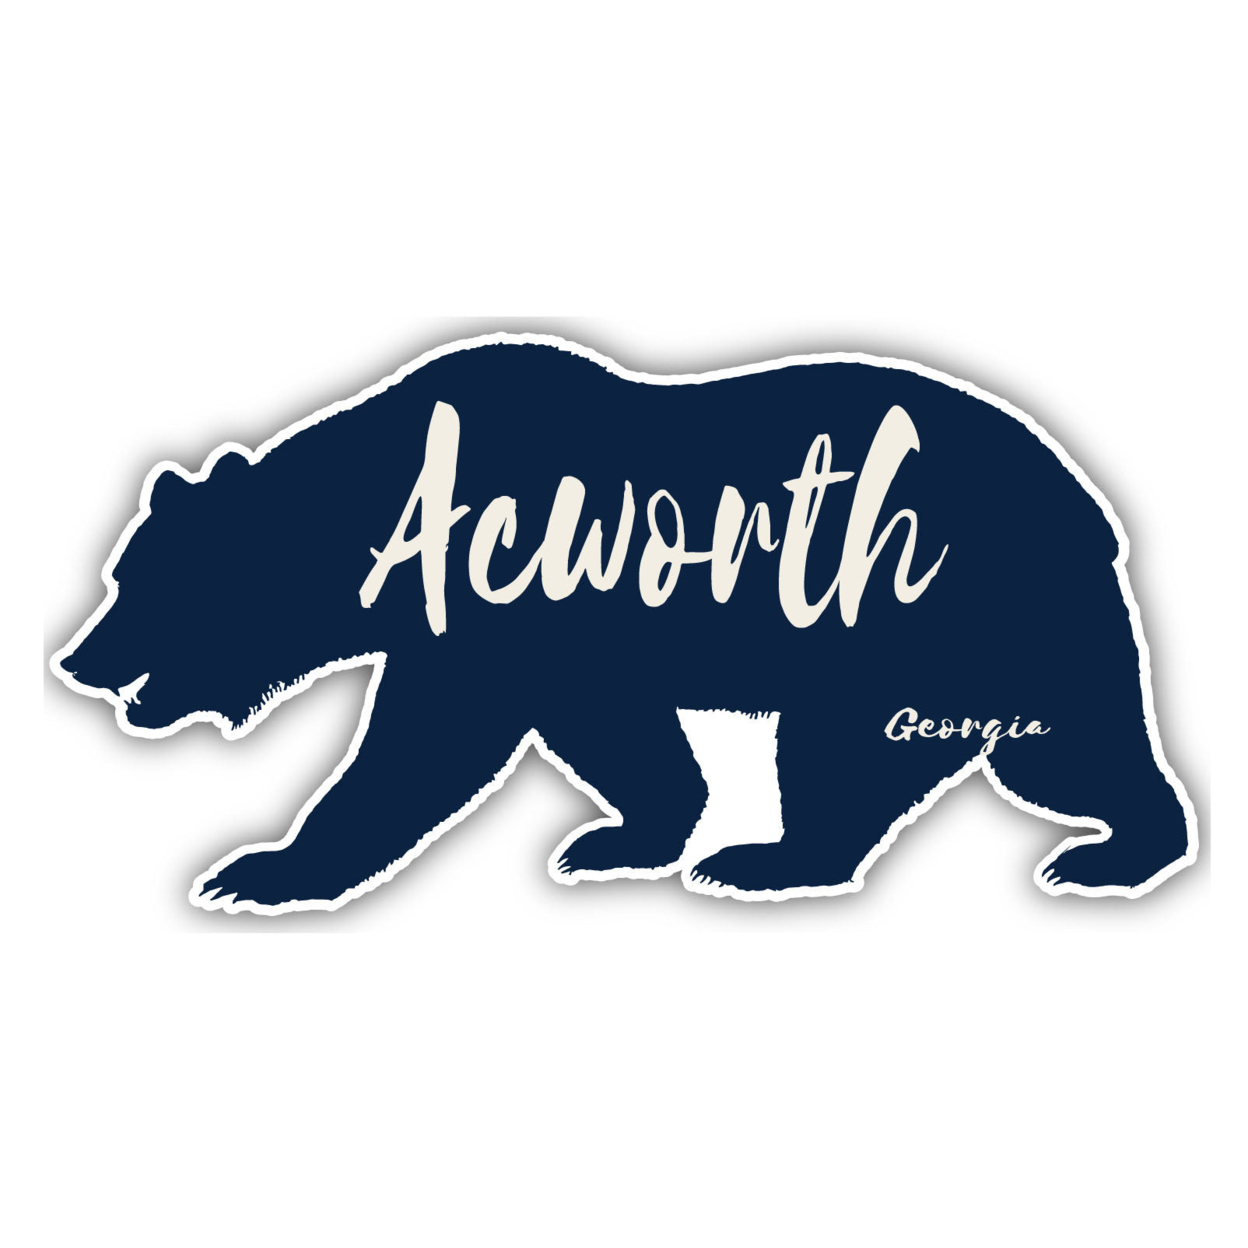 Acworth Georgia Souvenir Decorative Stickers (Choose Theme And Size) - 4-Pack, 6-Inch, Bear